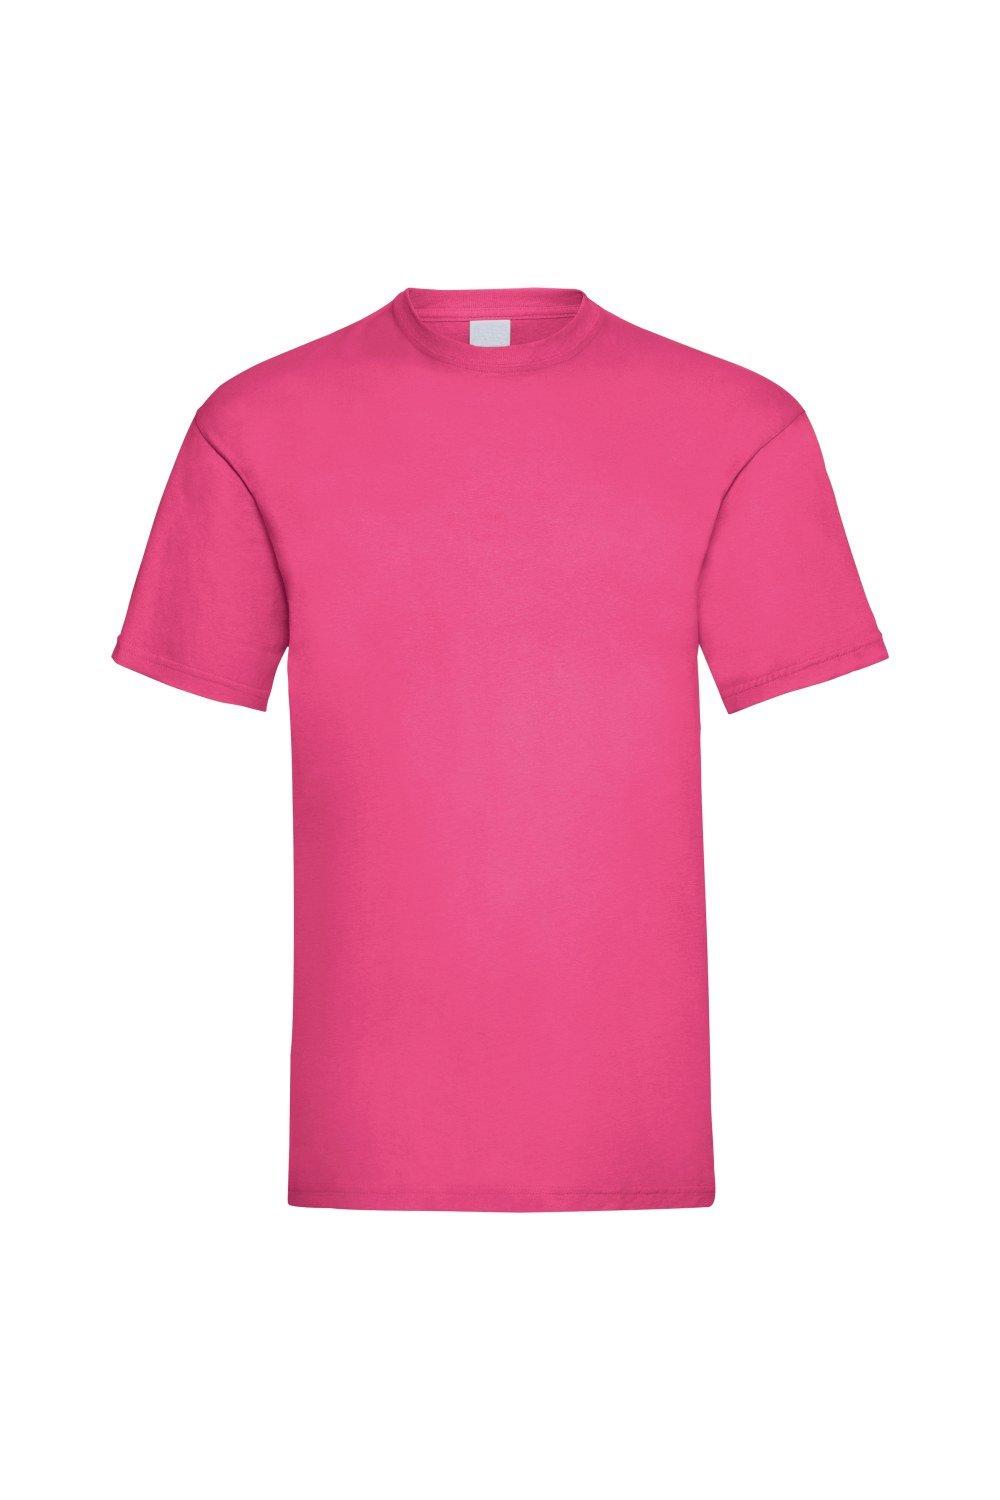 Повседневная футболка Value с короткими рукавами Universal Textiles, розовый футболка мужская котмаркот серый меланж